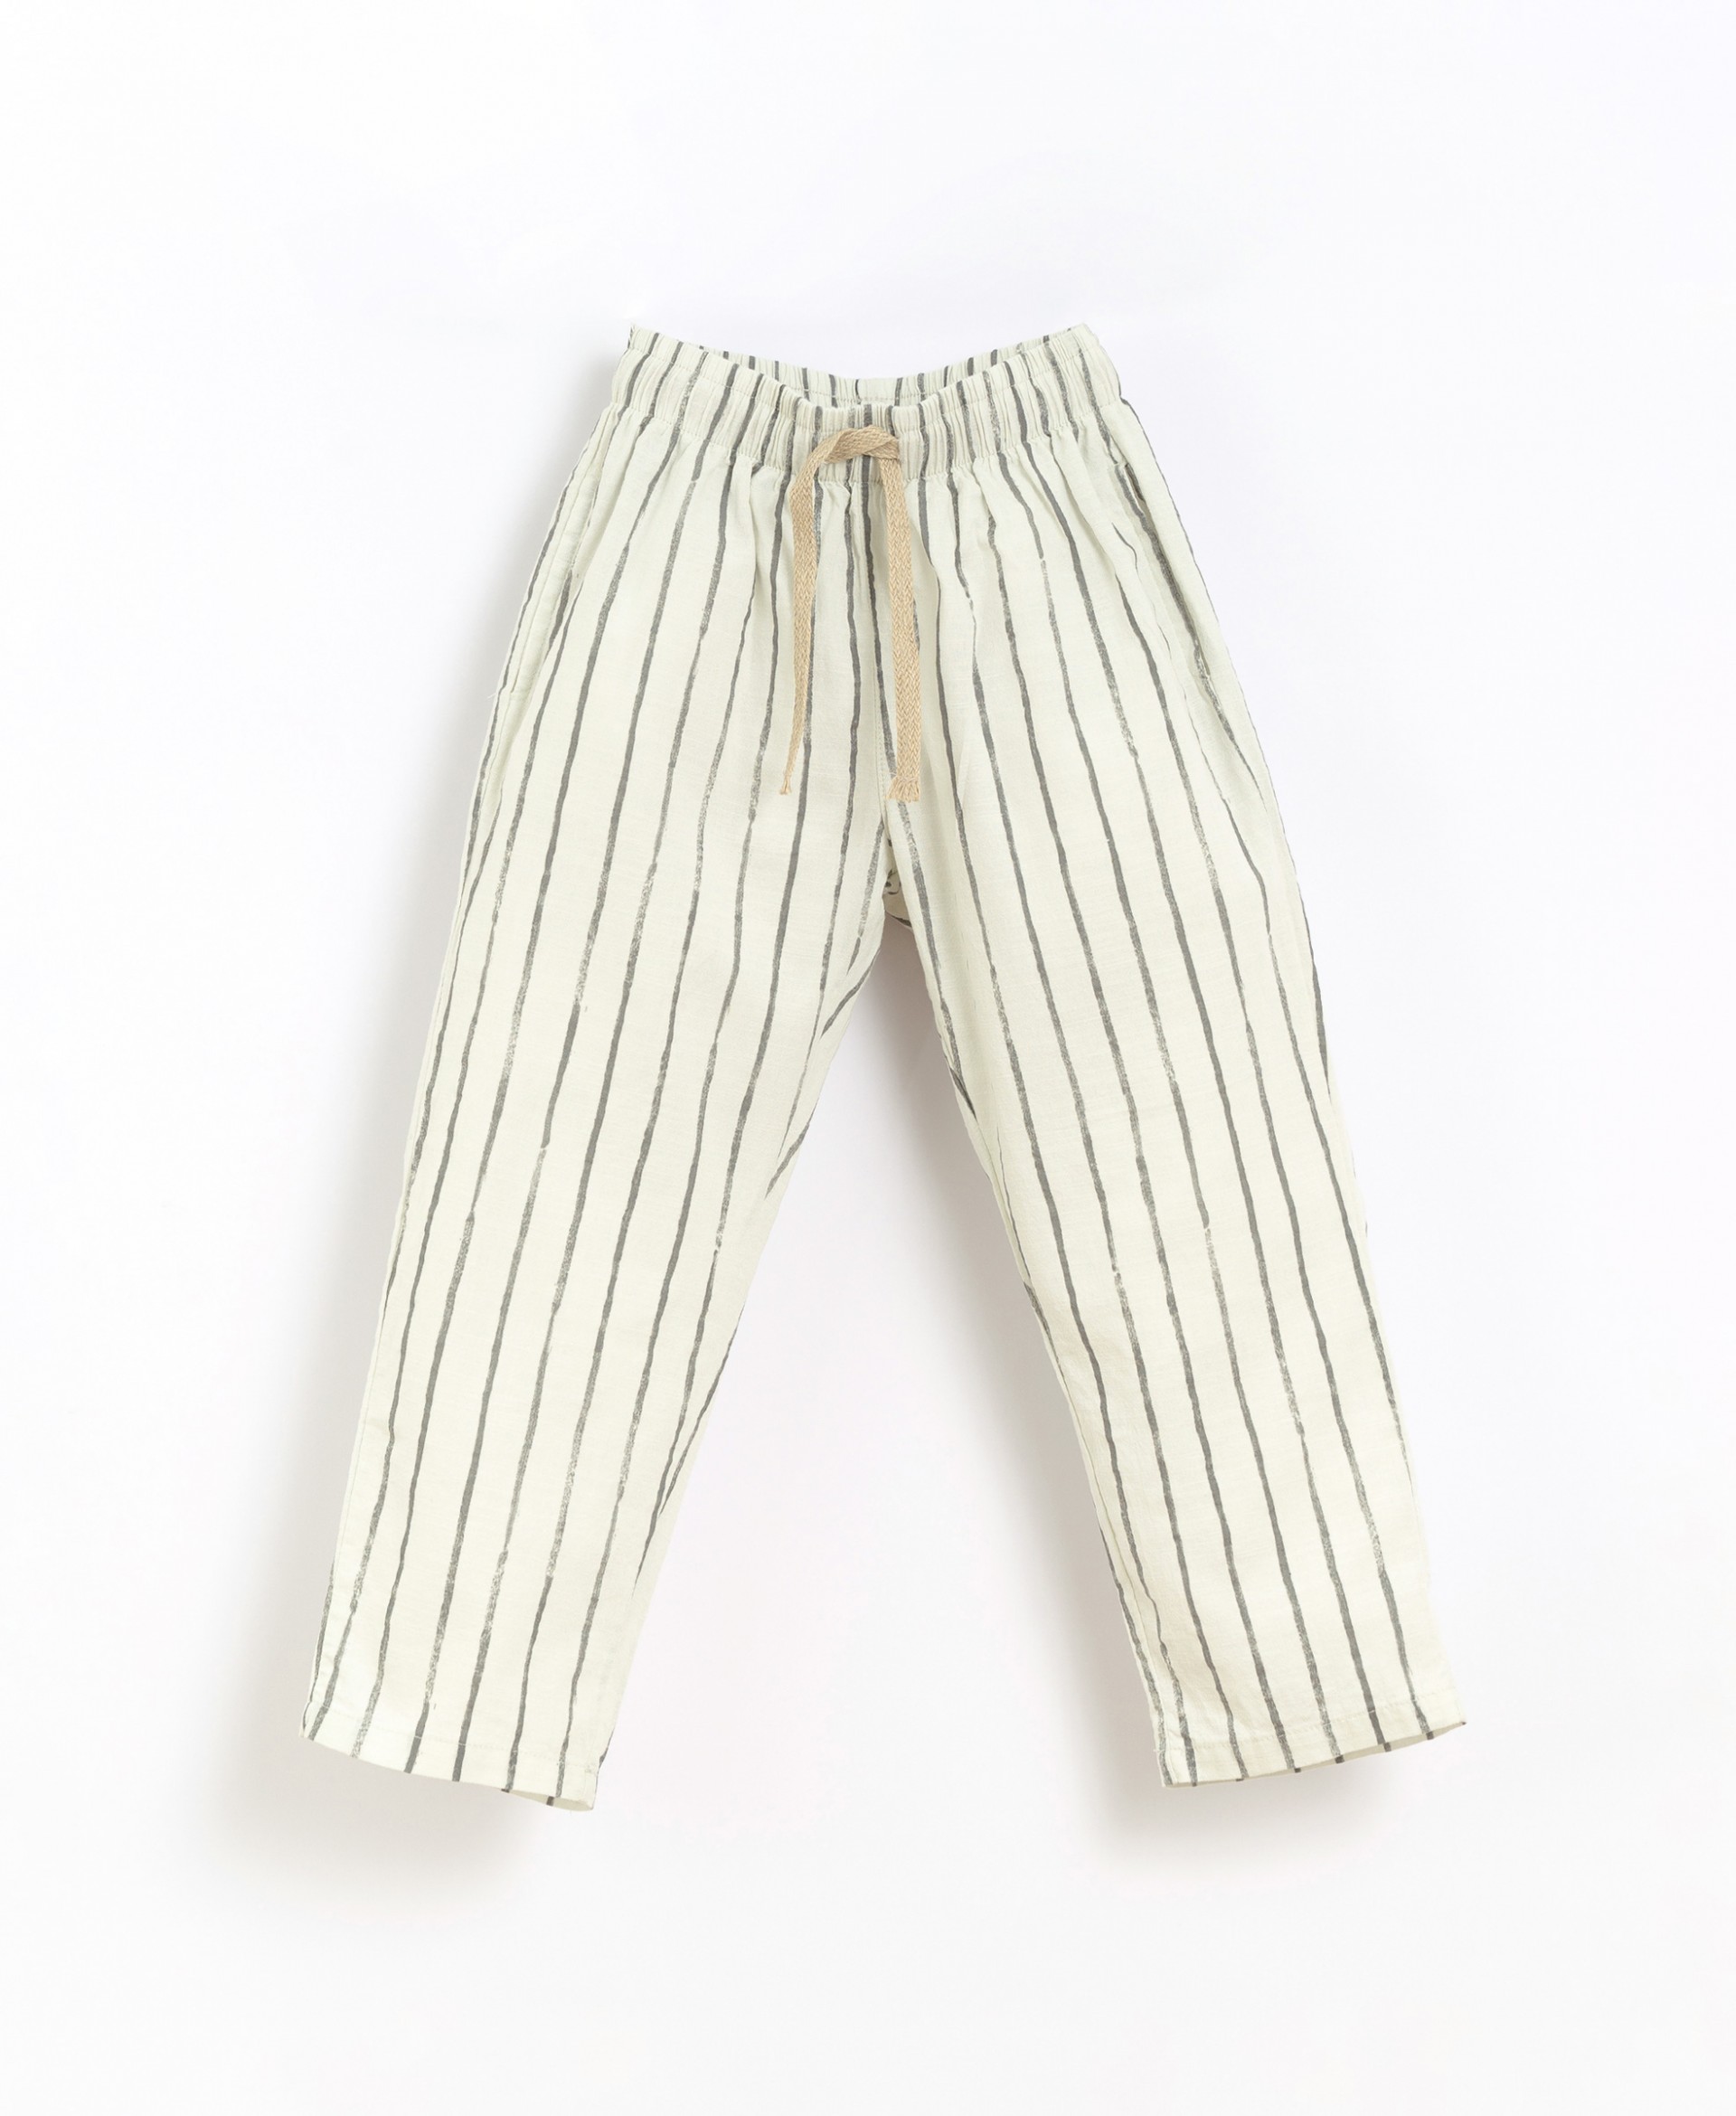 Pantalon rayé avec poches | Basketry